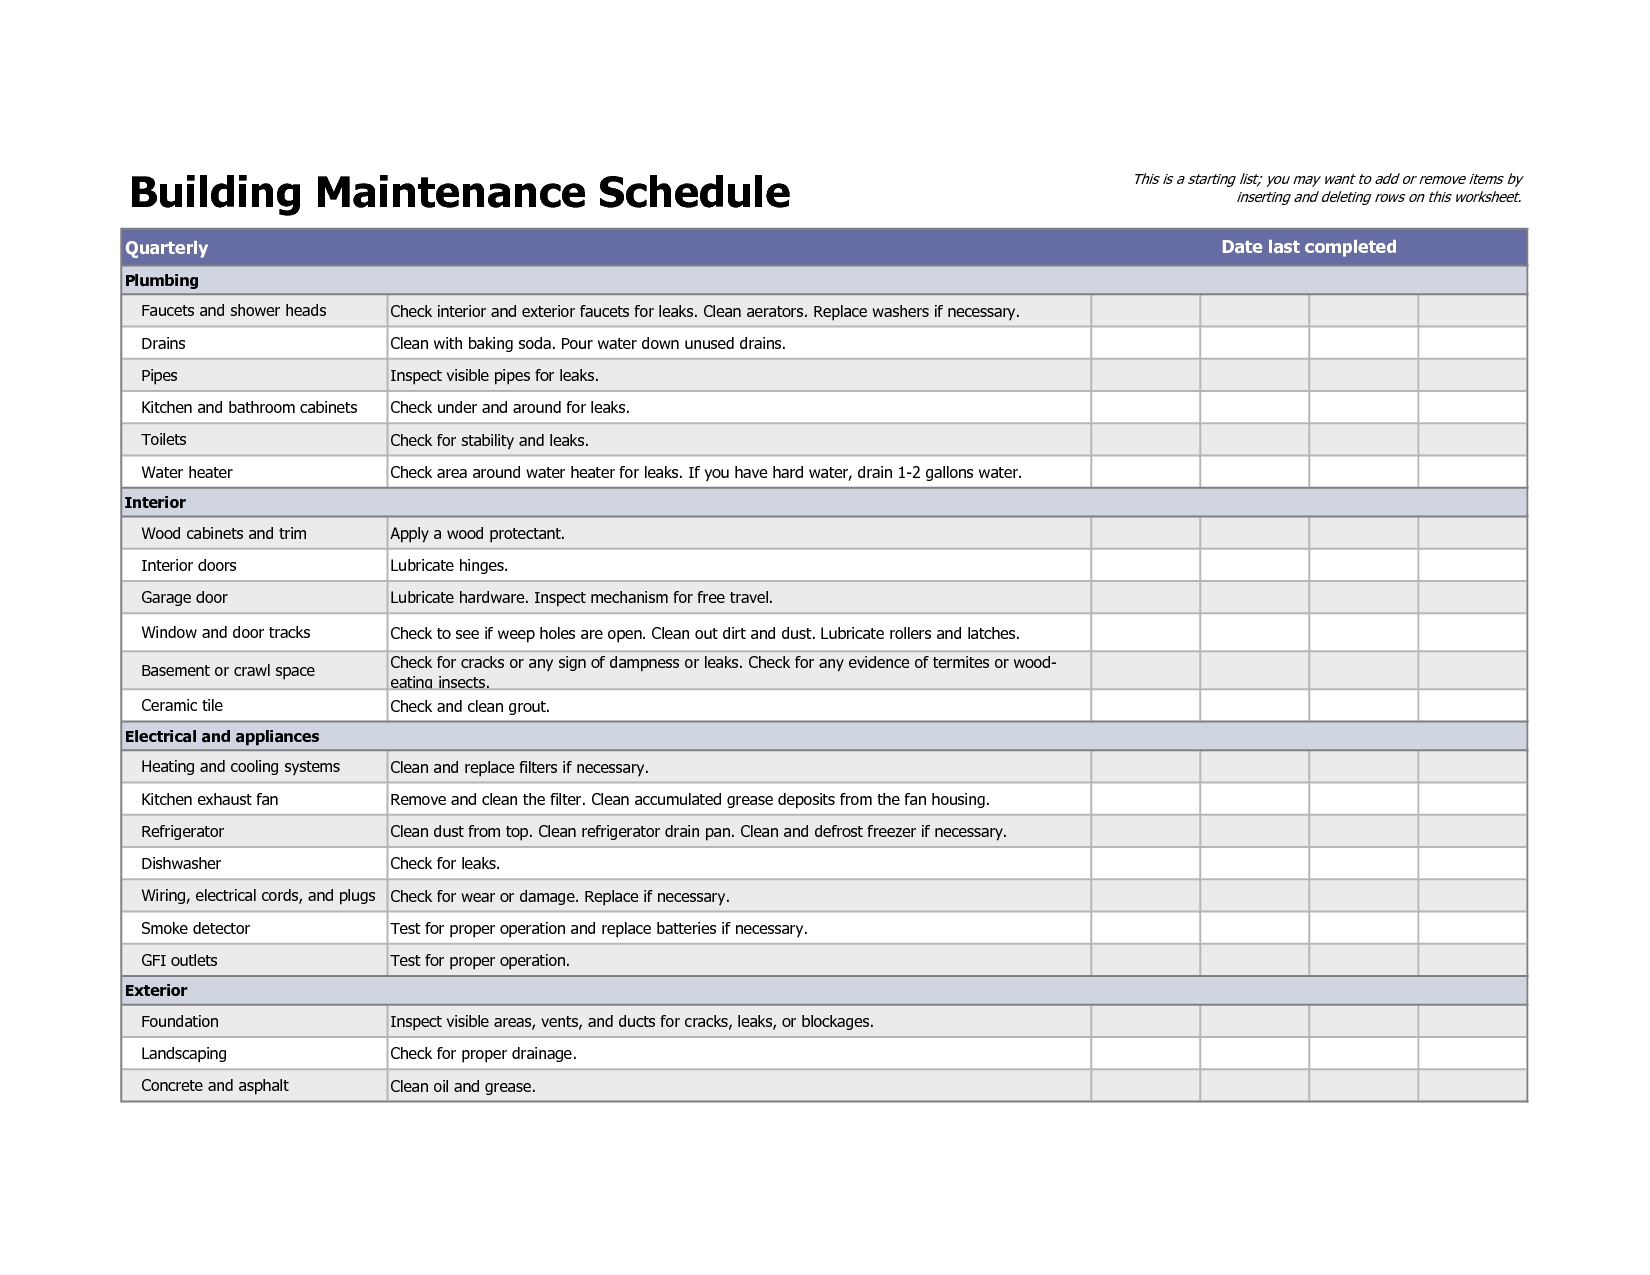 Building Maintenance Schedule Excel Template - printable ...